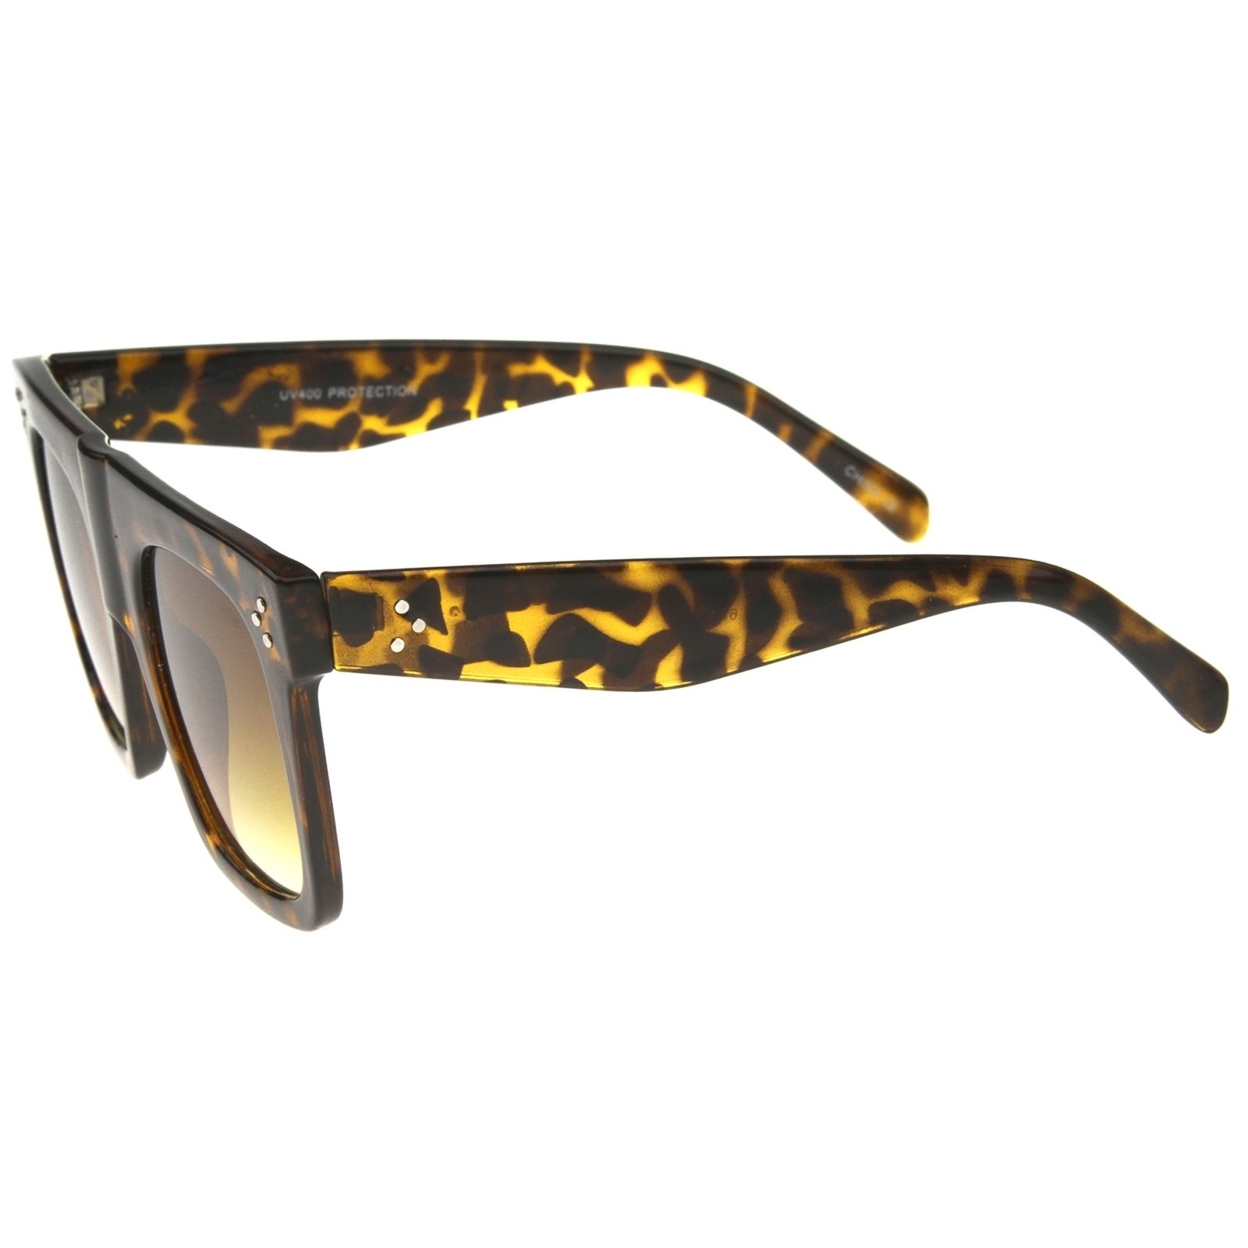 Modern Fashion Bold Flat Top Square Horn Rimmed Sunglasses 50mm - Tortoise / Amber